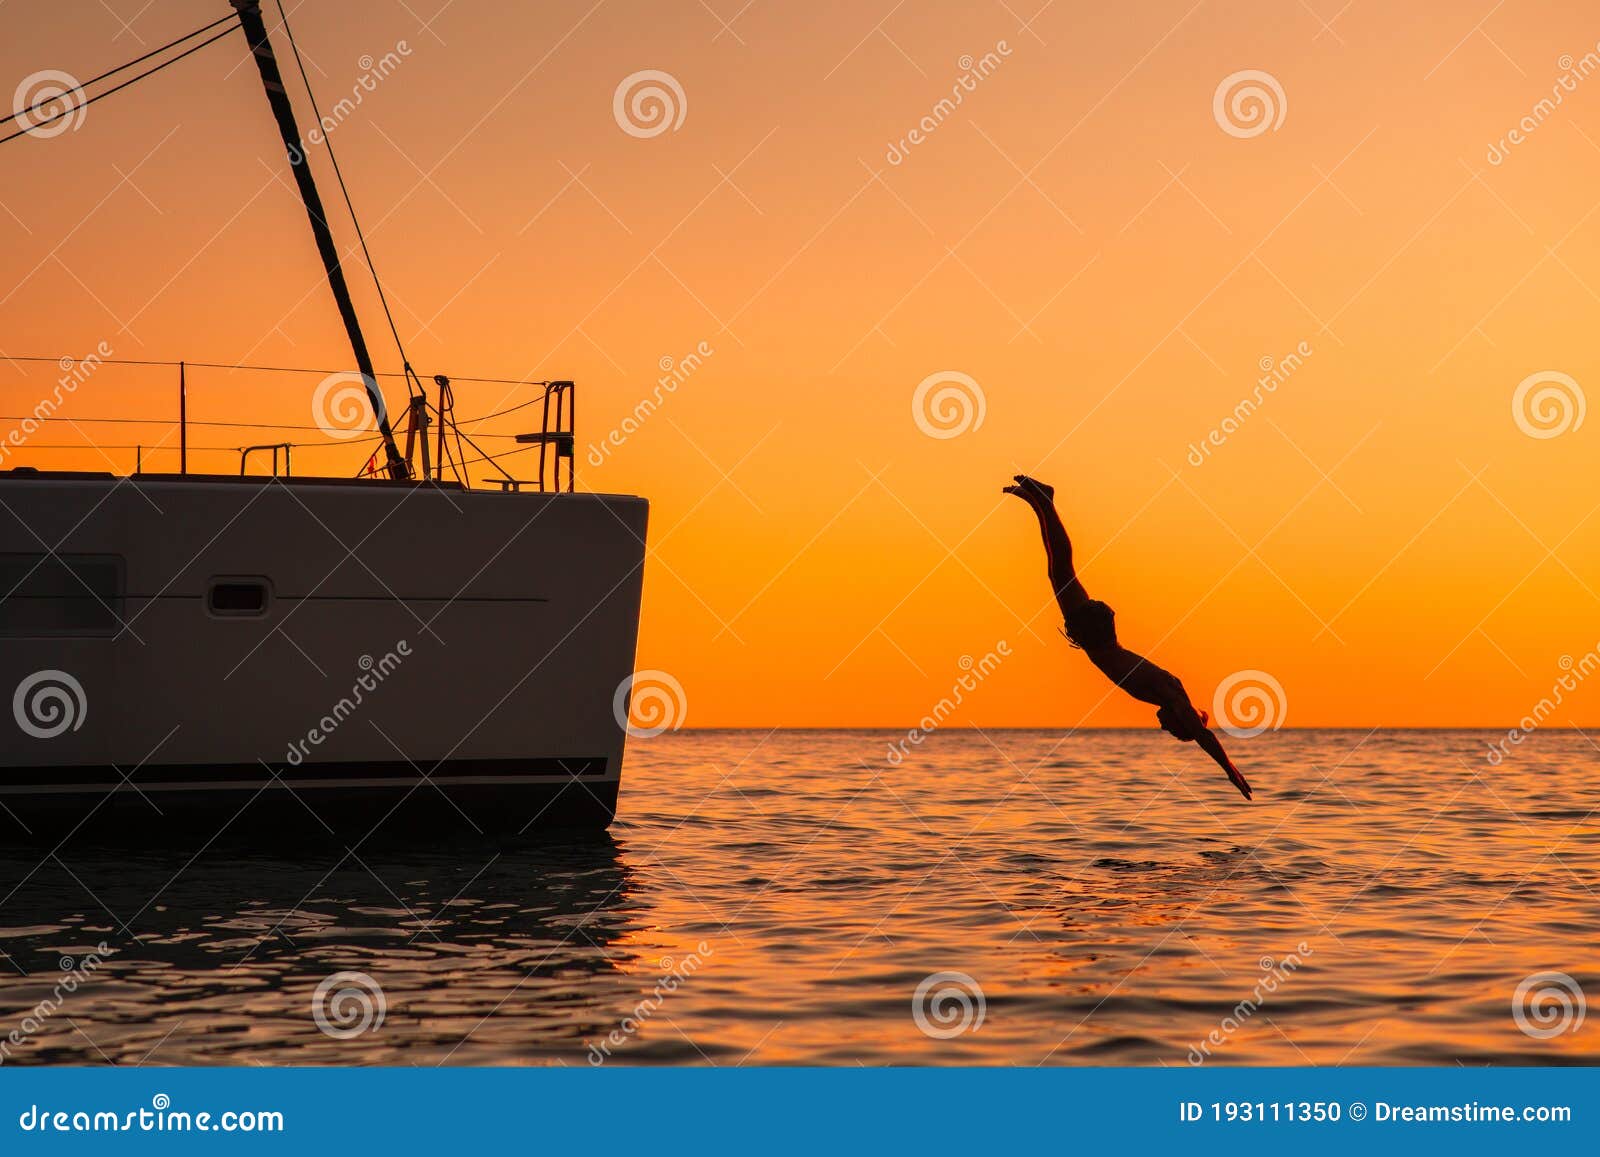 man falling off yacht